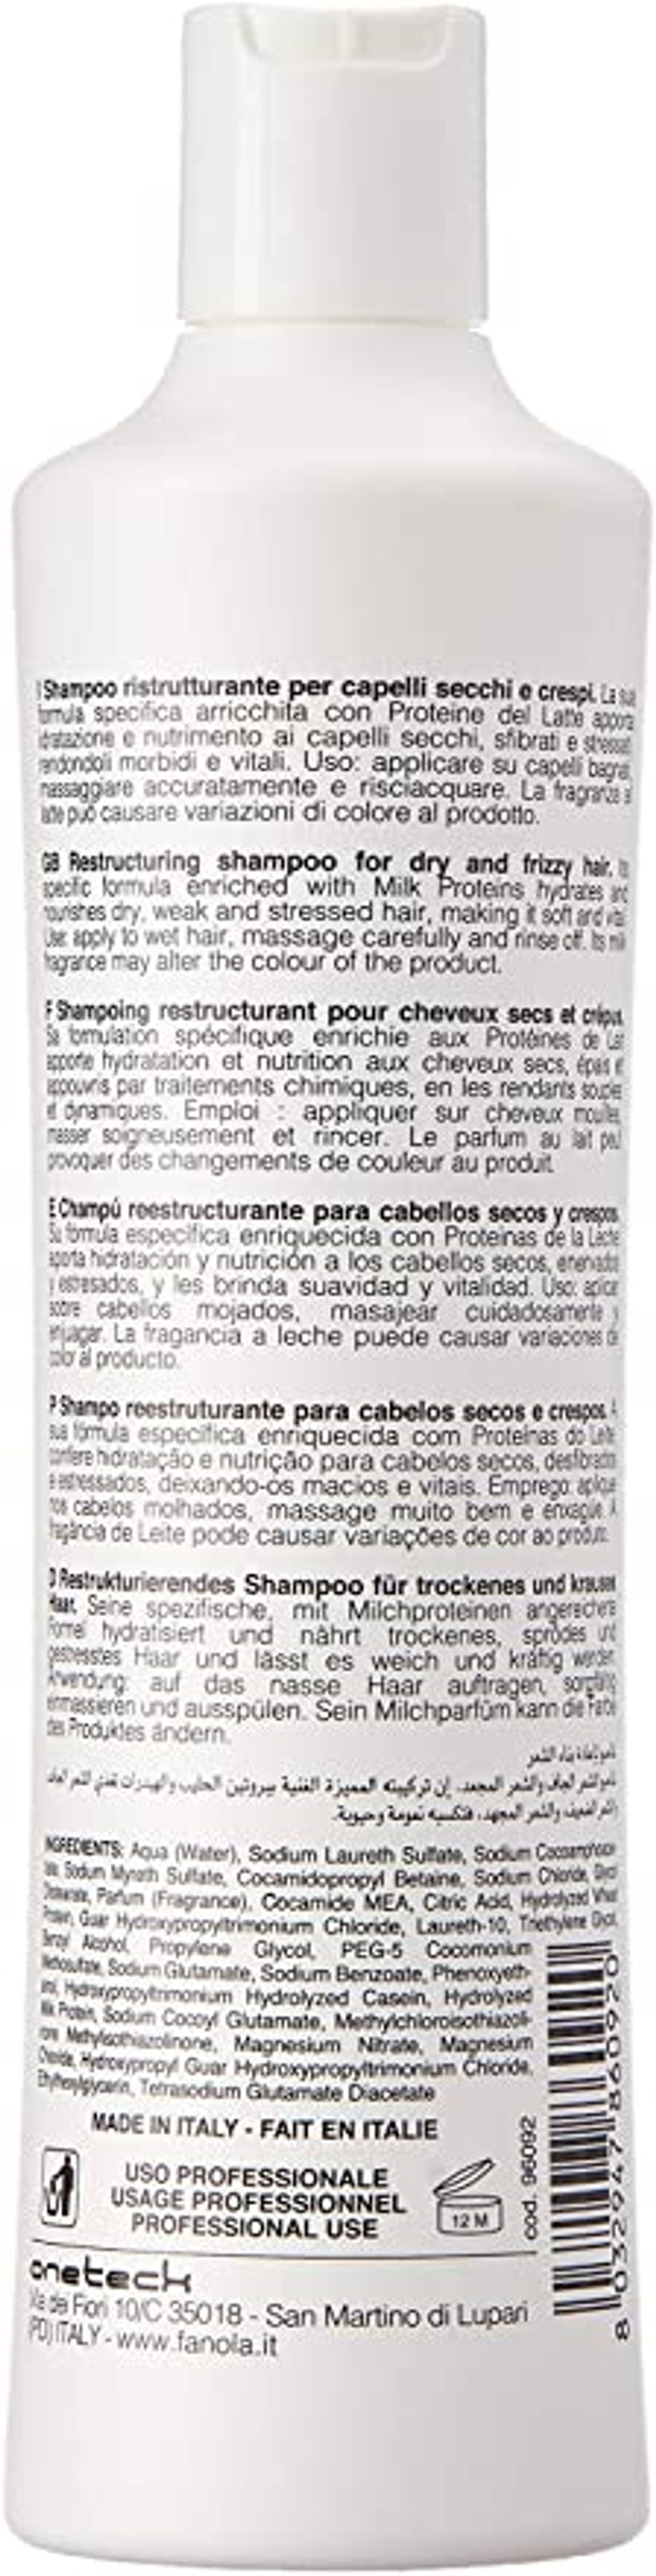 Fanola Nutricare Restructuring Shampoo - 350ml